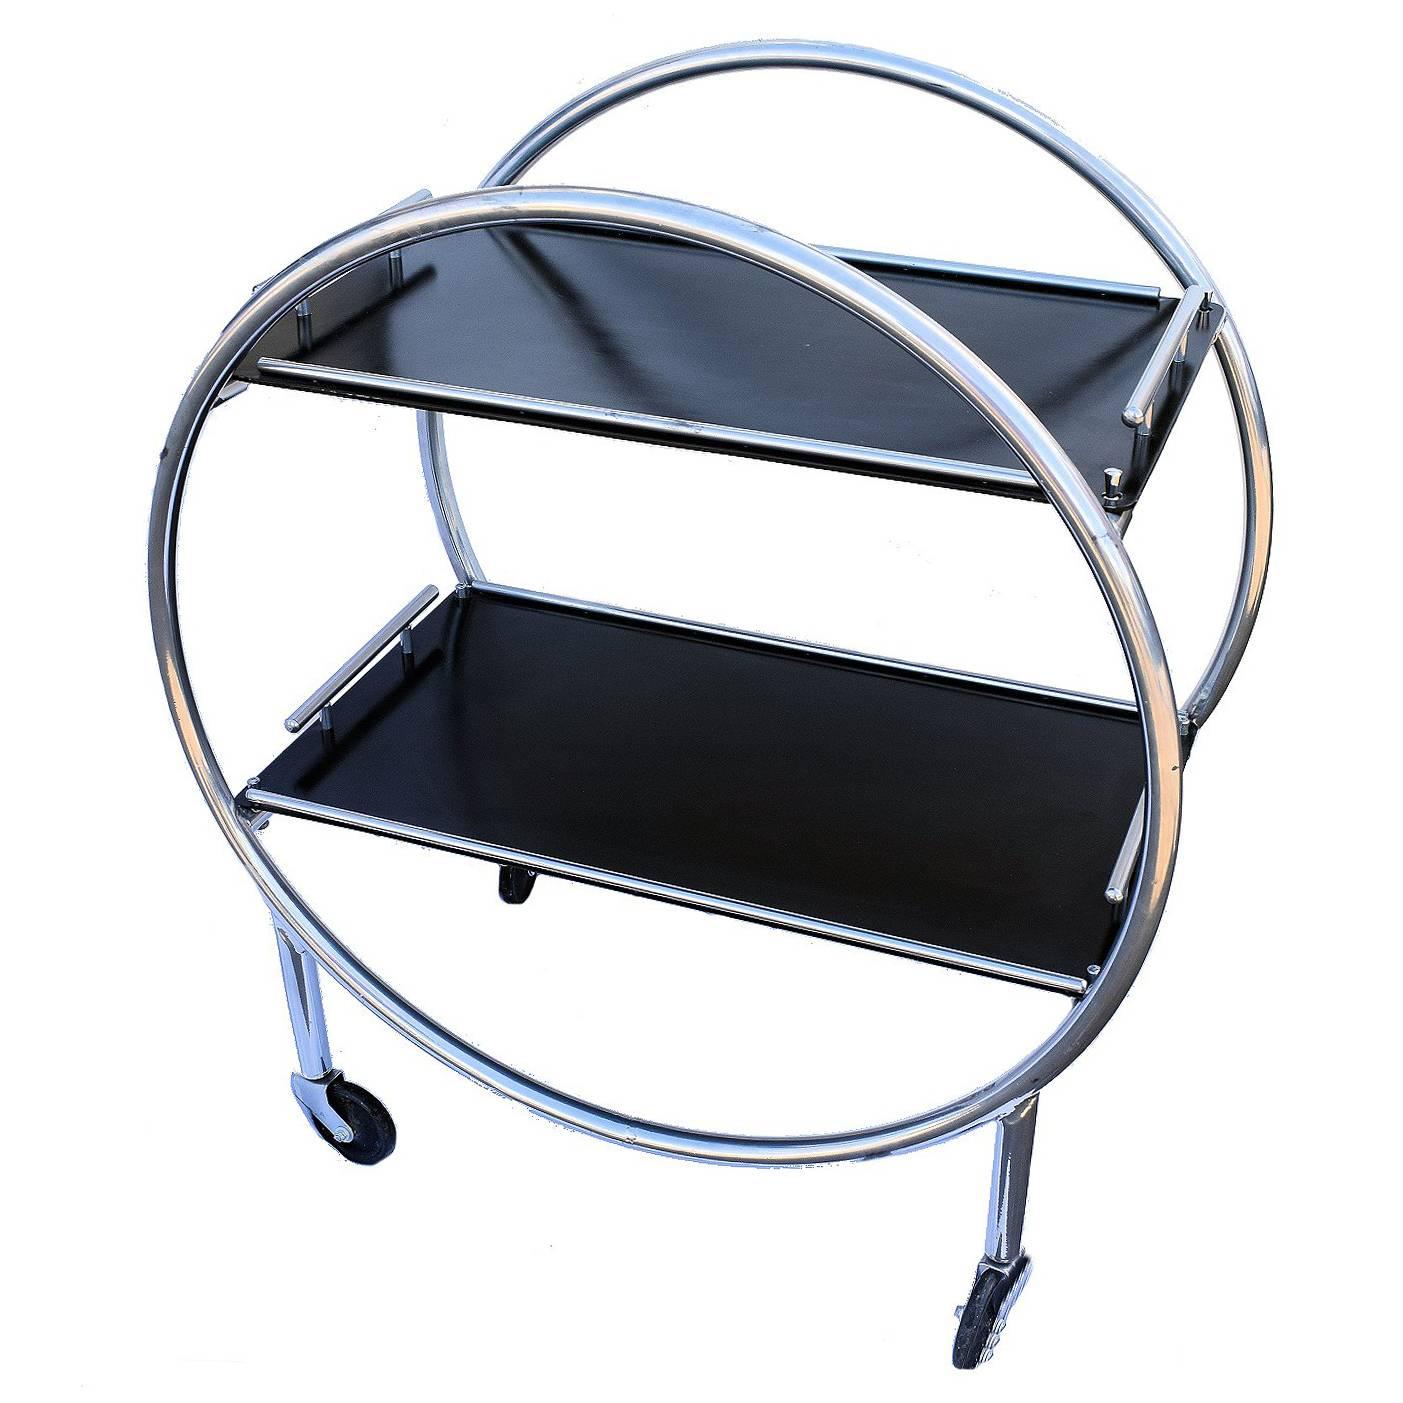 Art Deco English Two-Tier Chrome Bar Cart Hostess Trolley